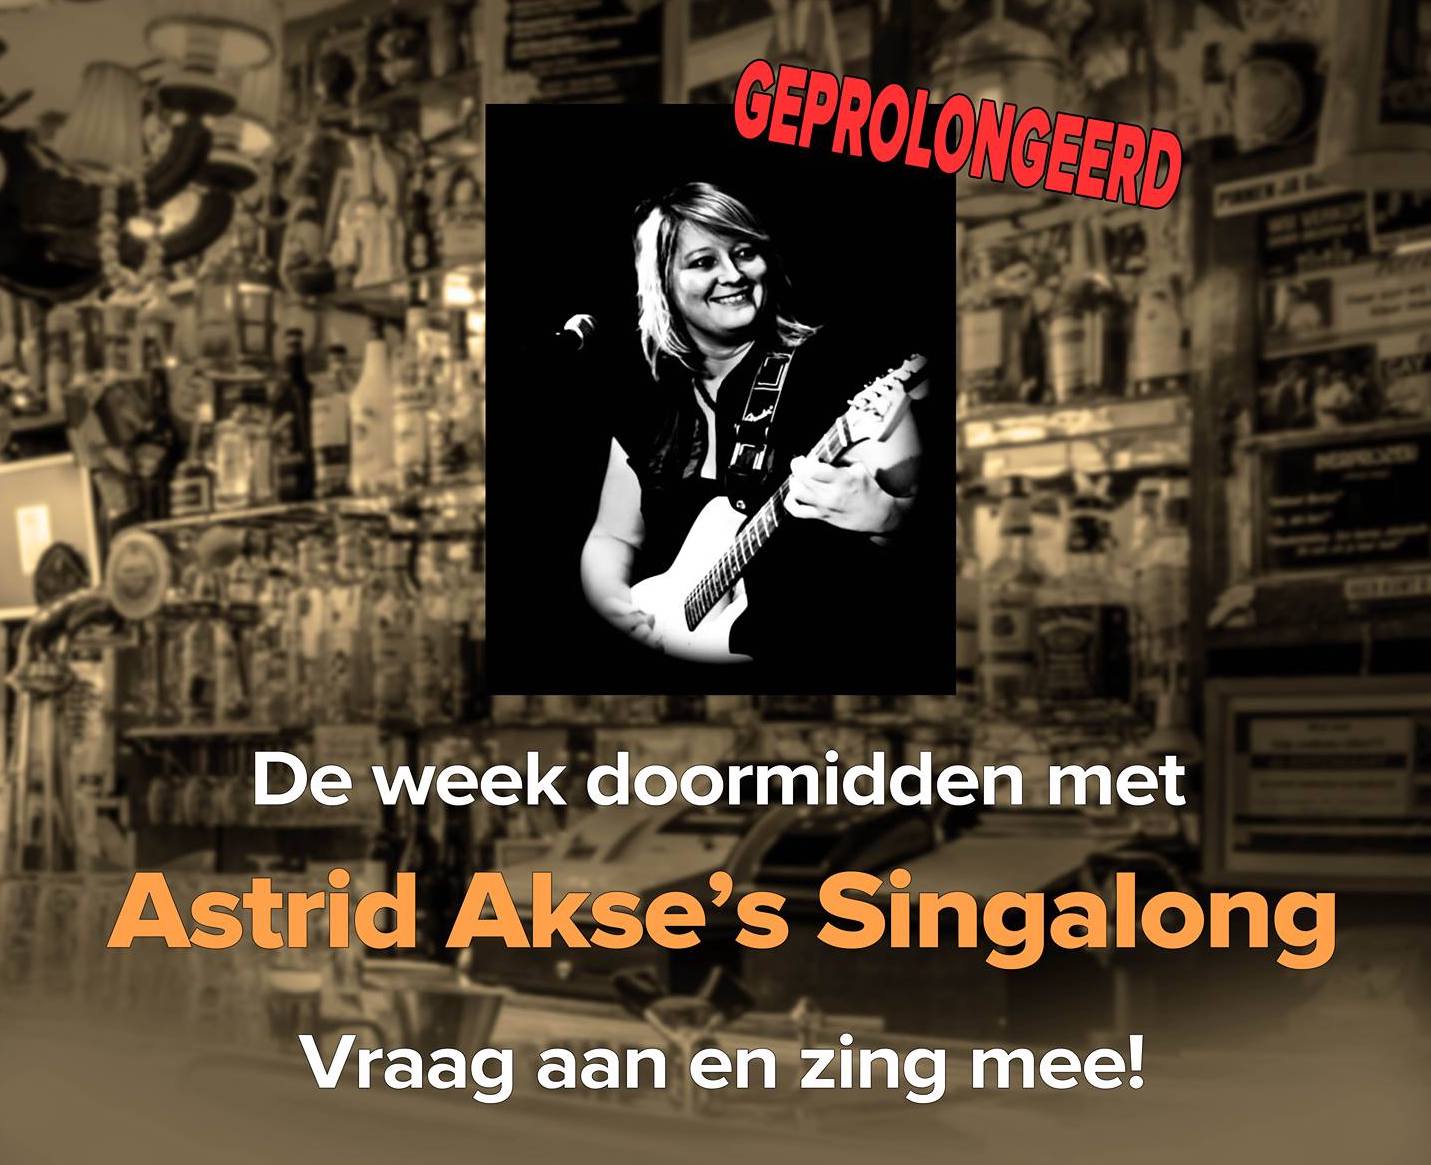 Astrid Akse's Singgalong